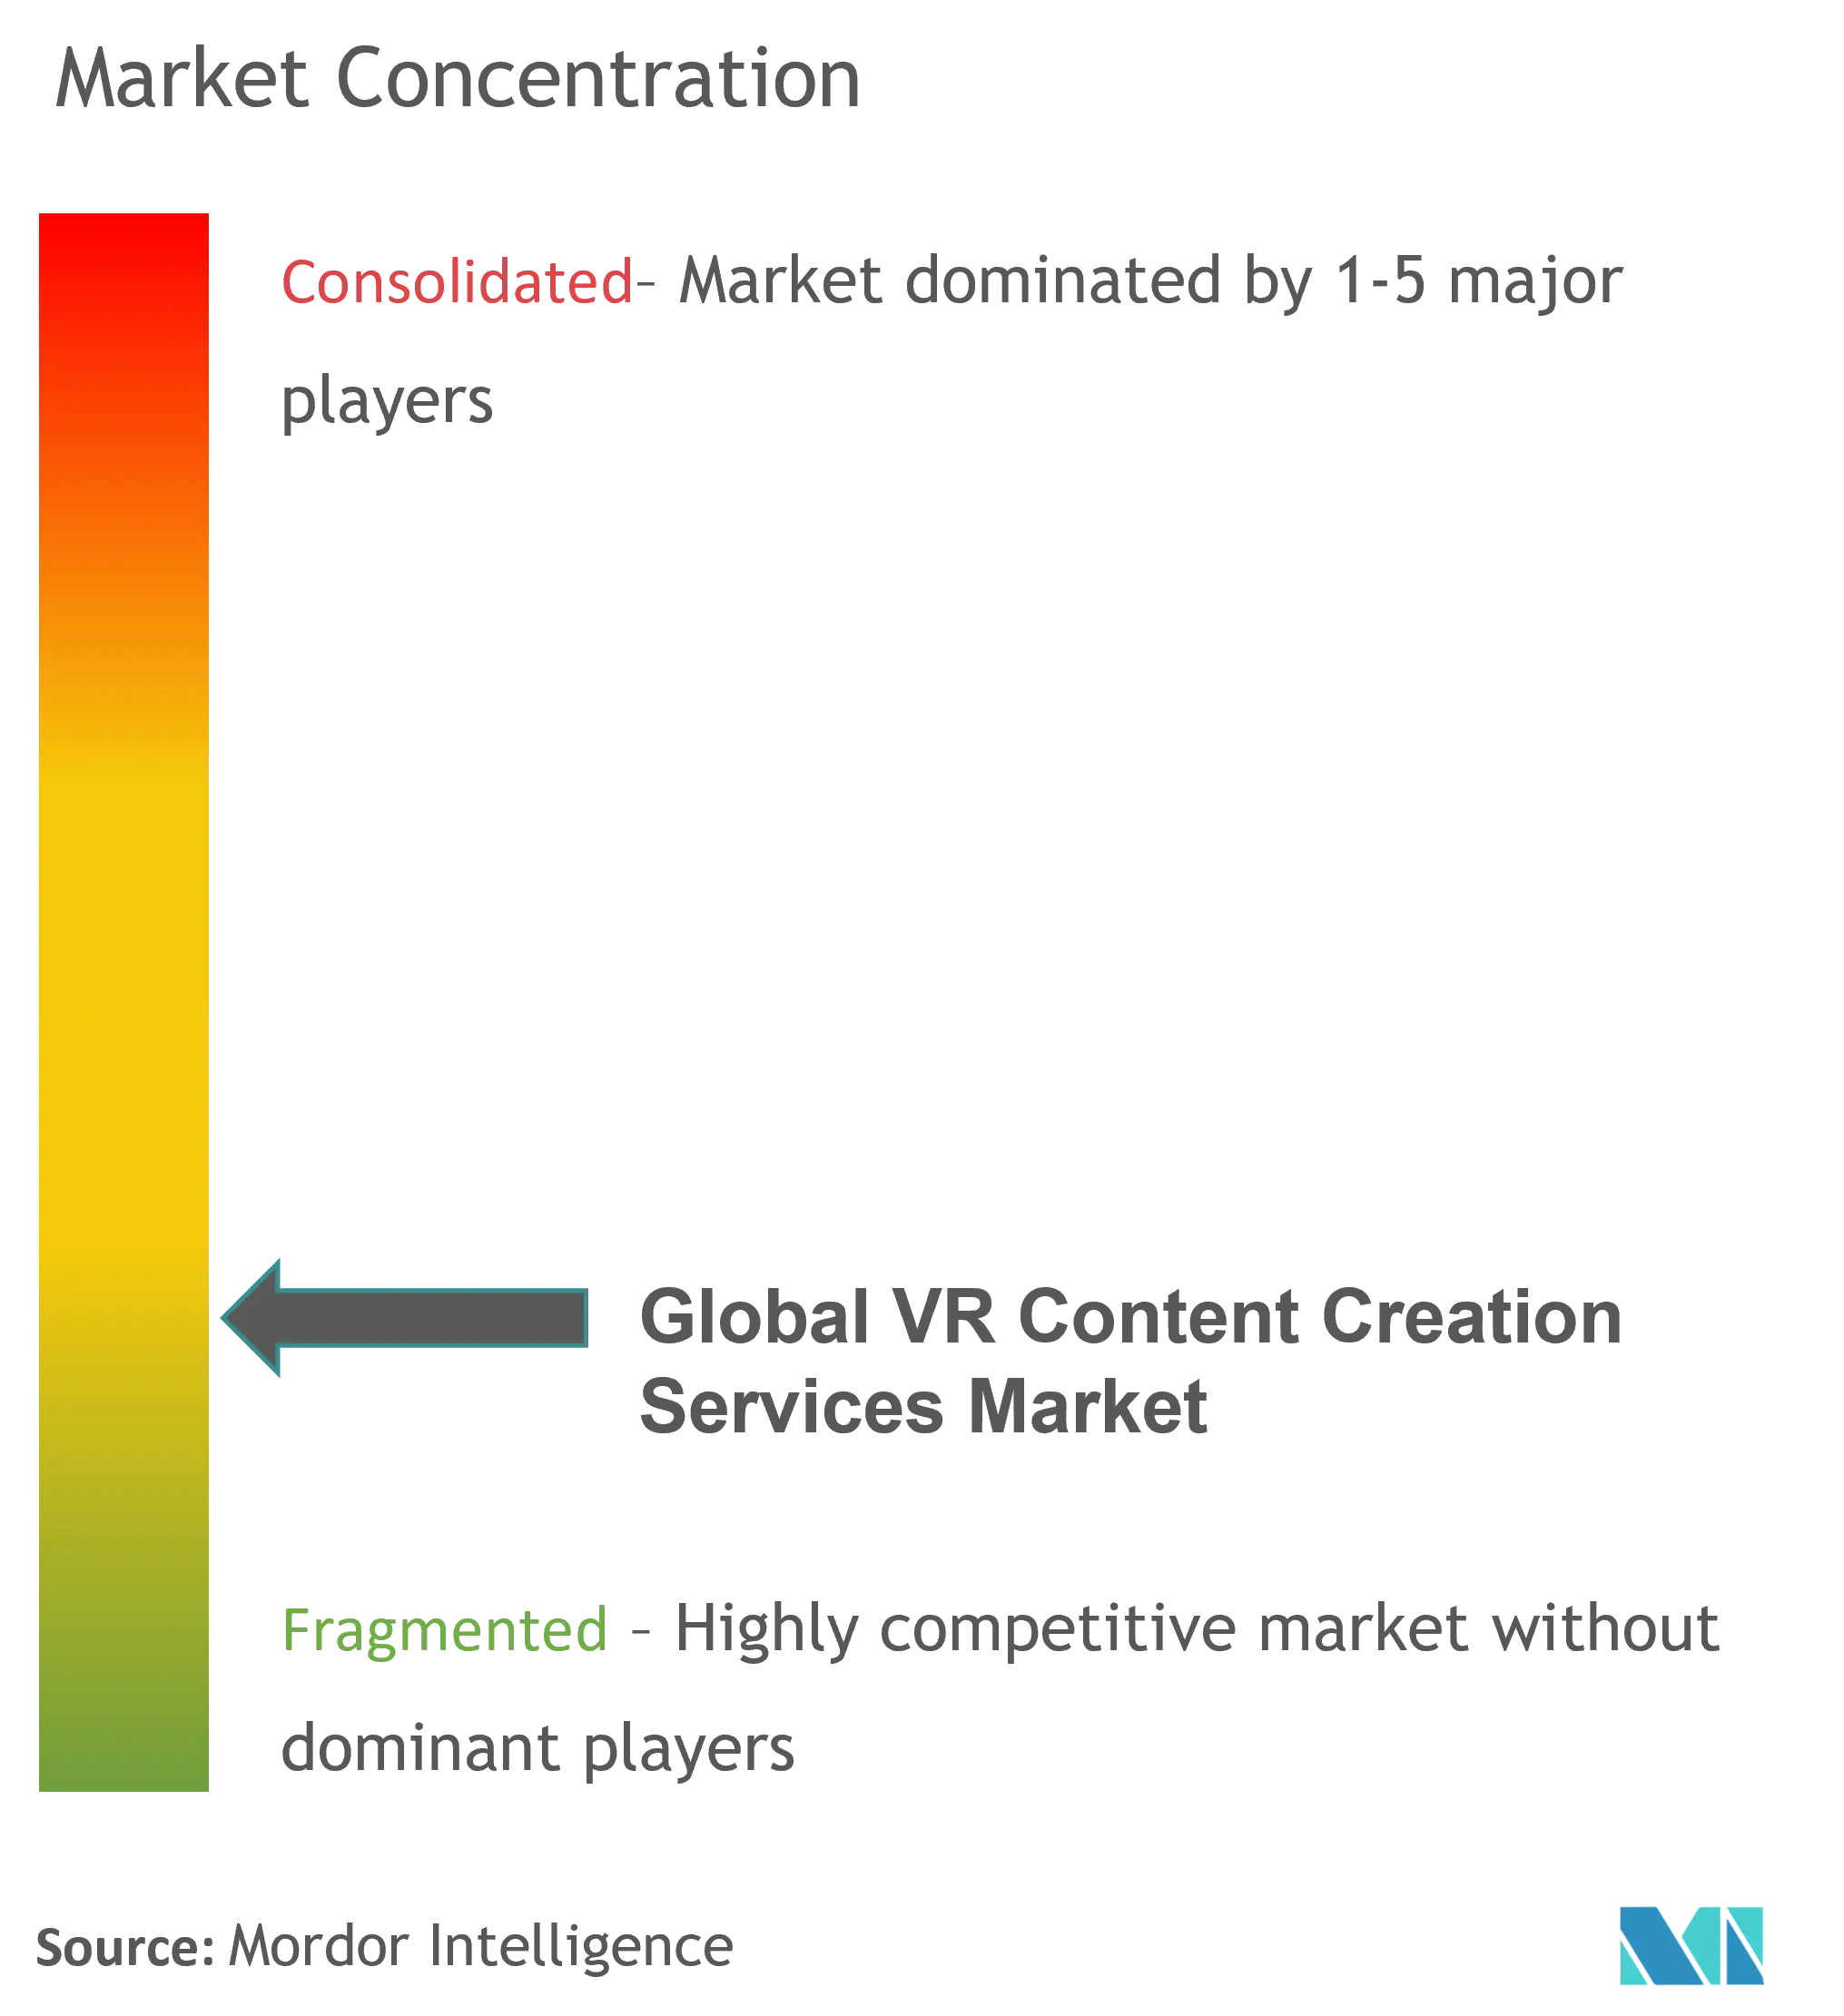 VR Content Creation Services Market Concentration